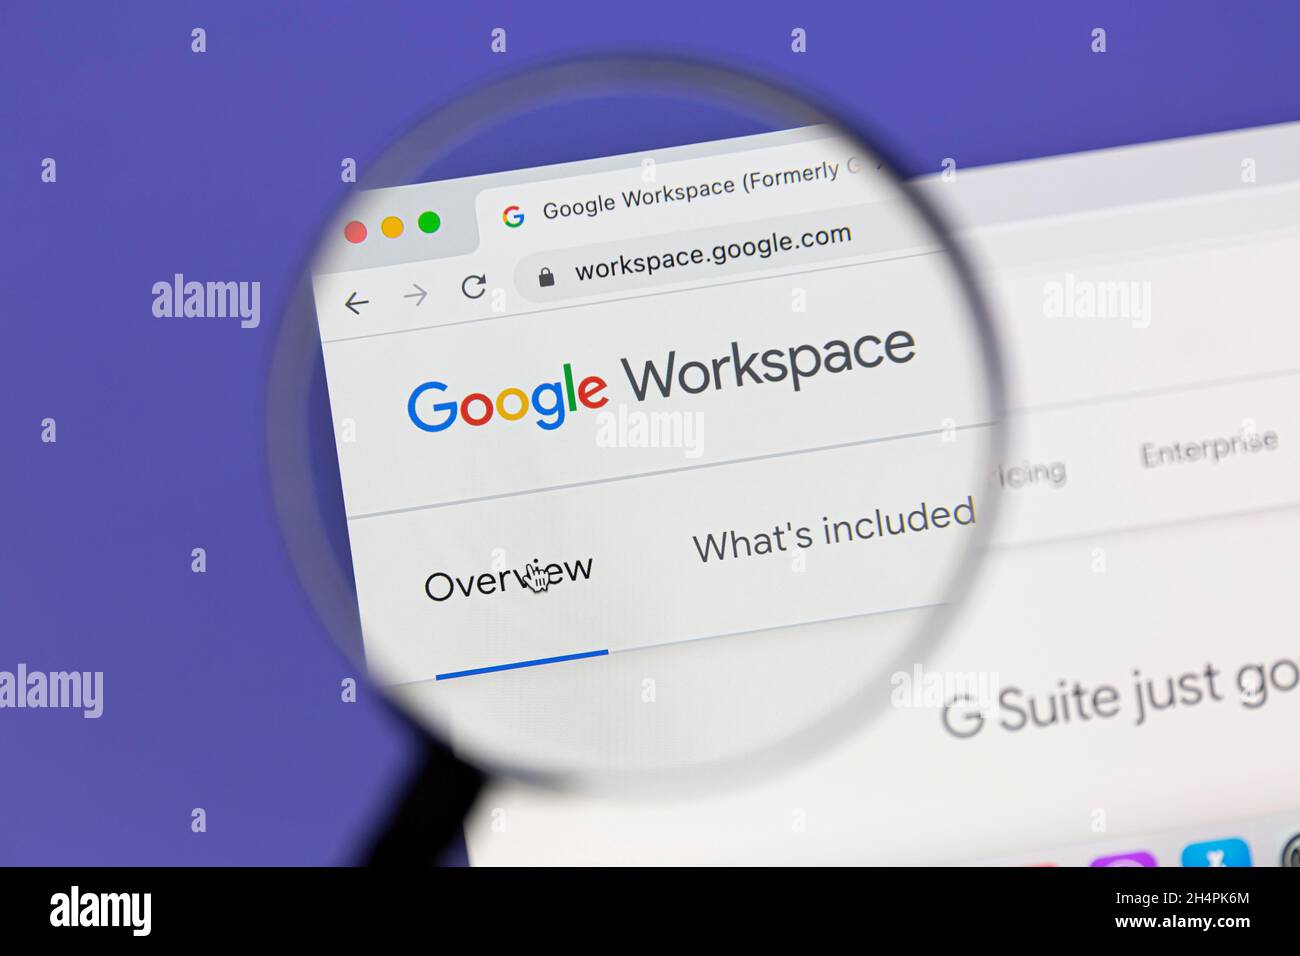 Ostersund, Sweden - June 2, 2021: Google Workspace website. Google Workspace is the same service as G Suite. Stock Photo